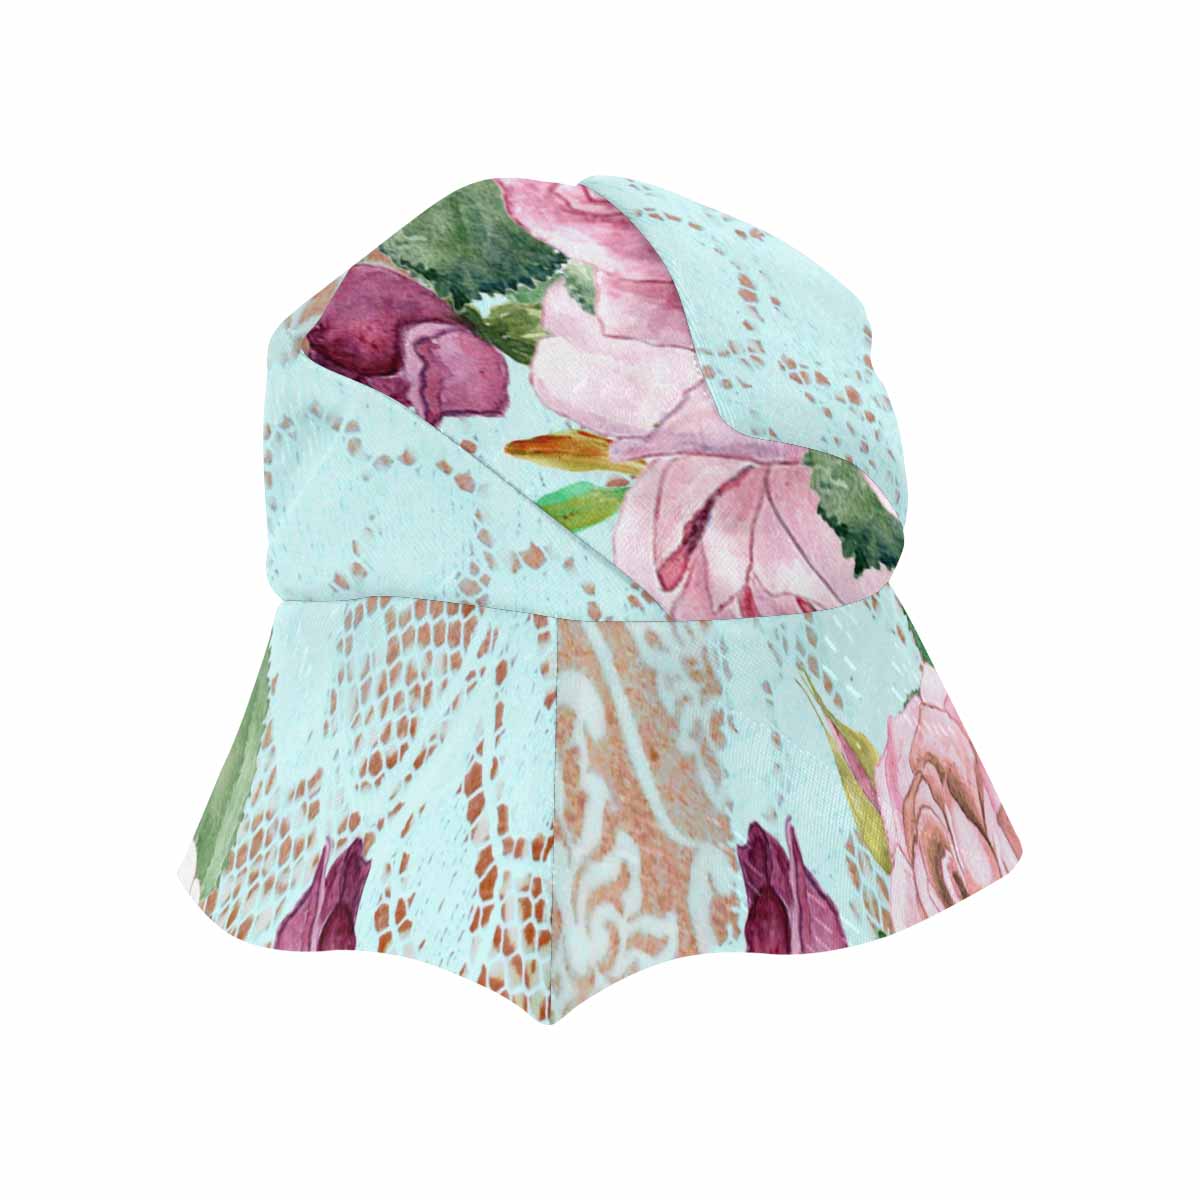 Victorian lace print, wide brim sunvisor Hat, outdoors hat, design 24